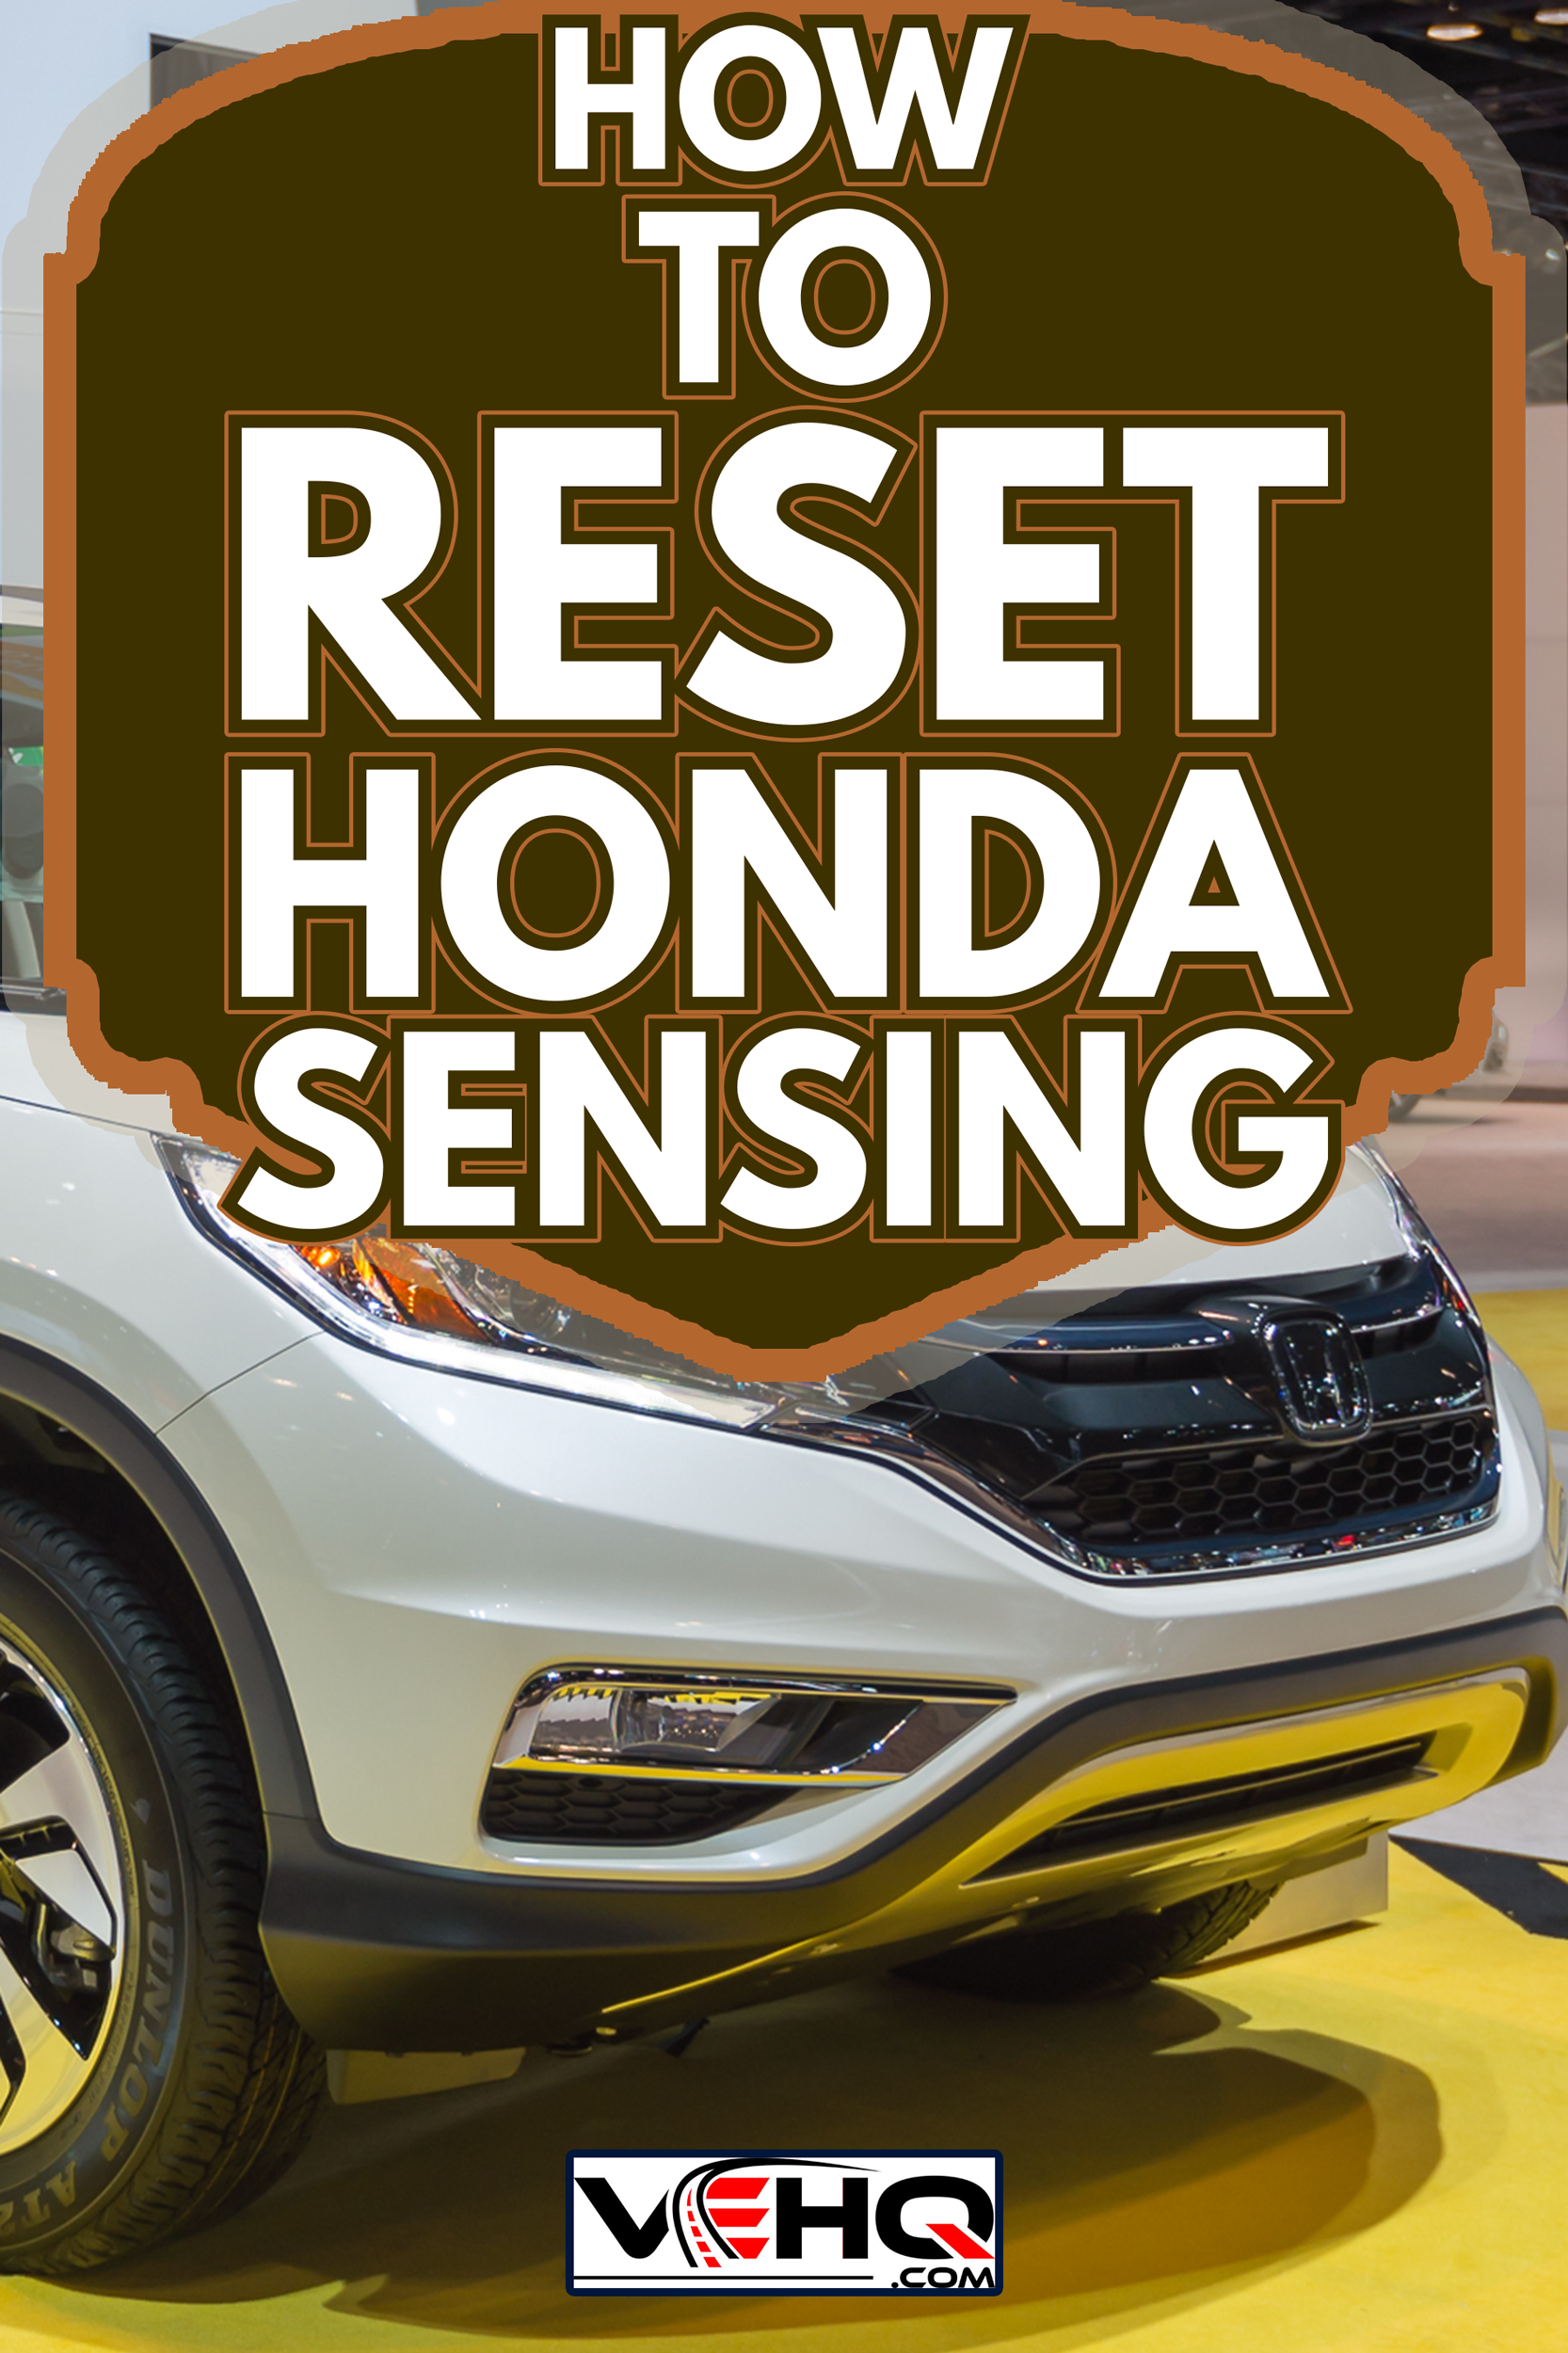 Honda Sensing CR-V car at the Chicago Auto Show (CAS), the largest auto show in North America. - How To Reset Honda Sensing